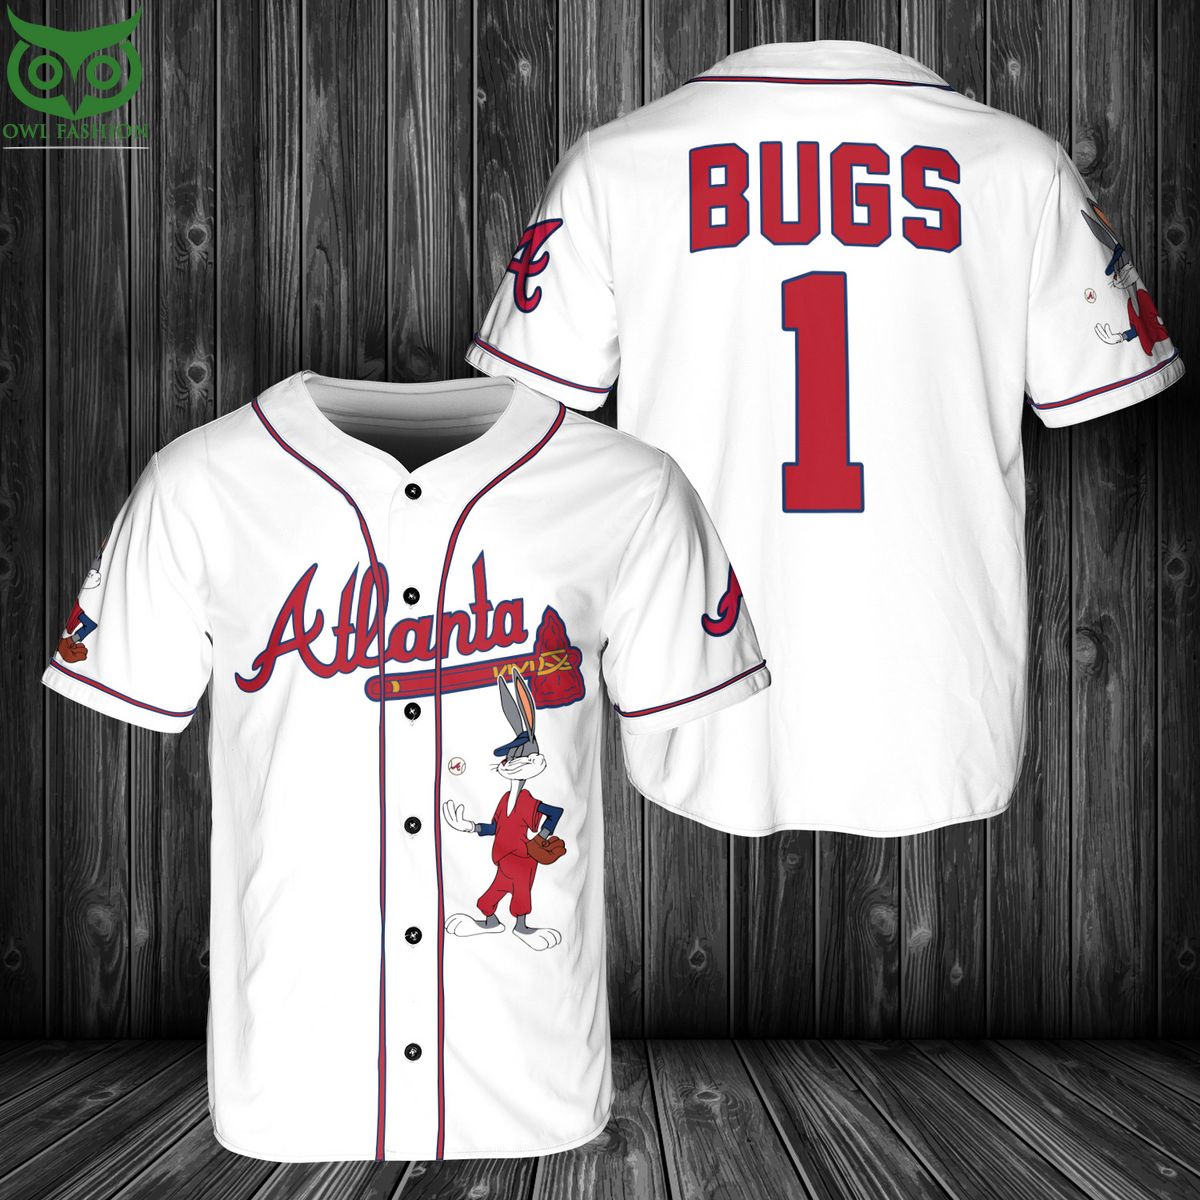 MLB Atlanta Braves Bugs Bunny Baseball Jersey Shirt